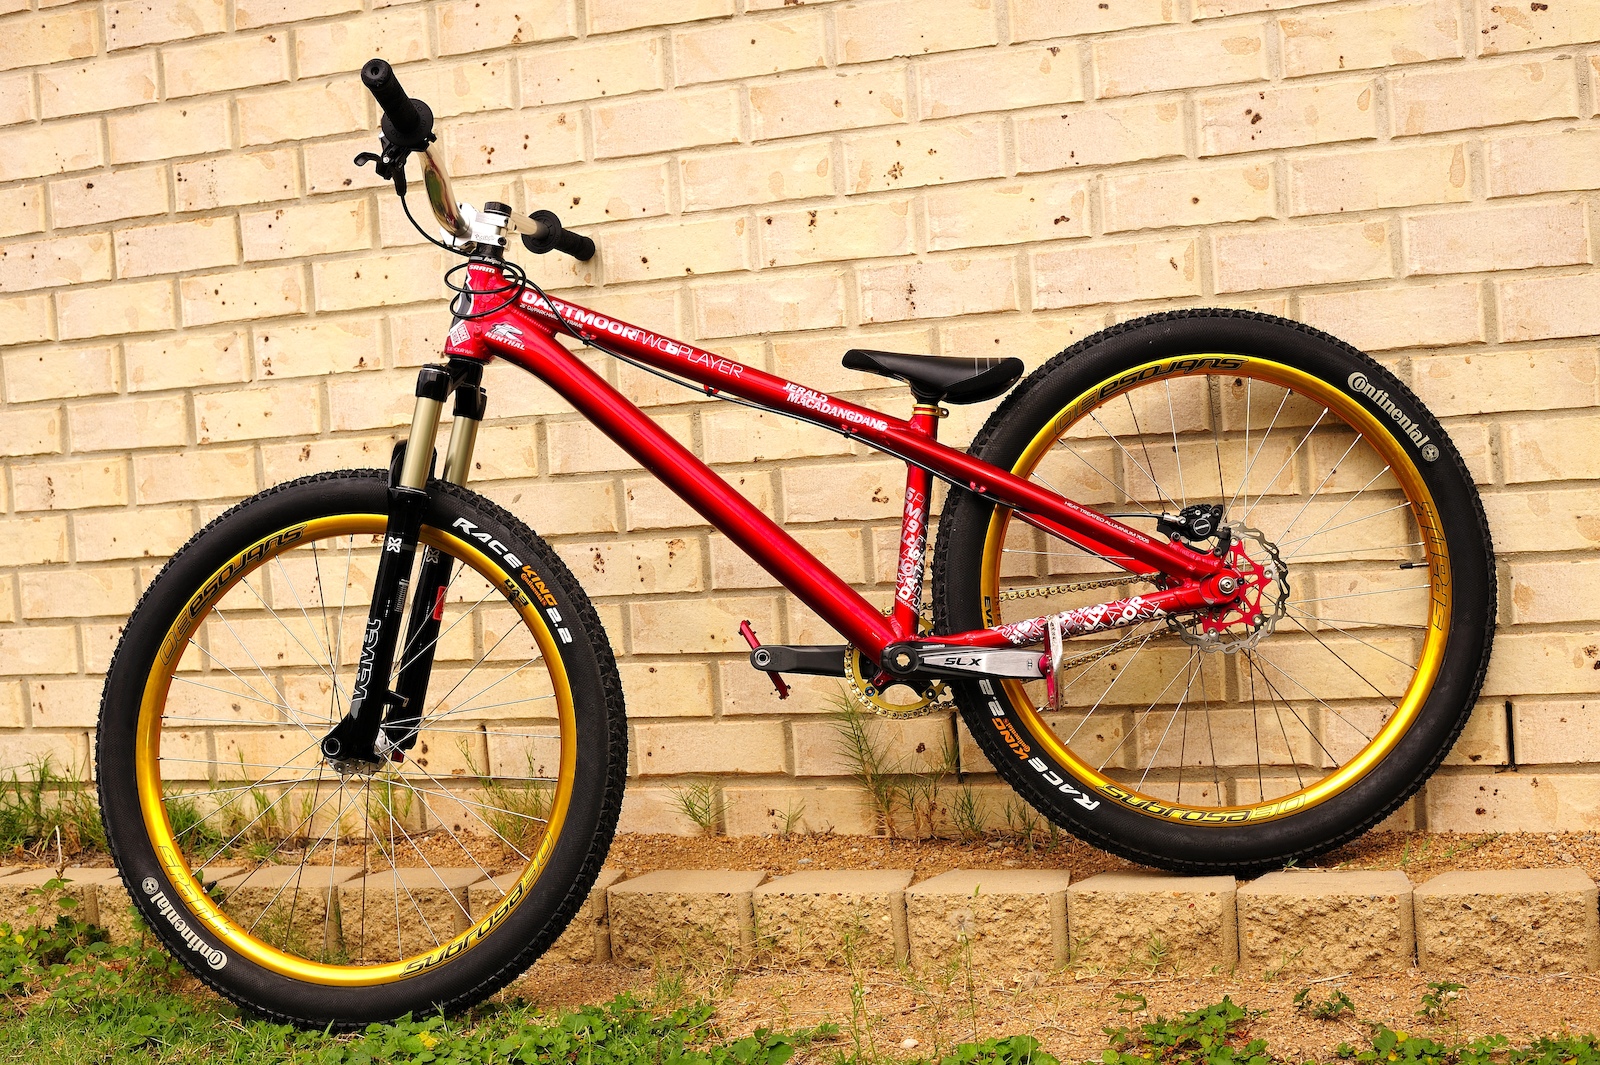 New Dirt Jump Bike! Dartmoor 26 Player Build